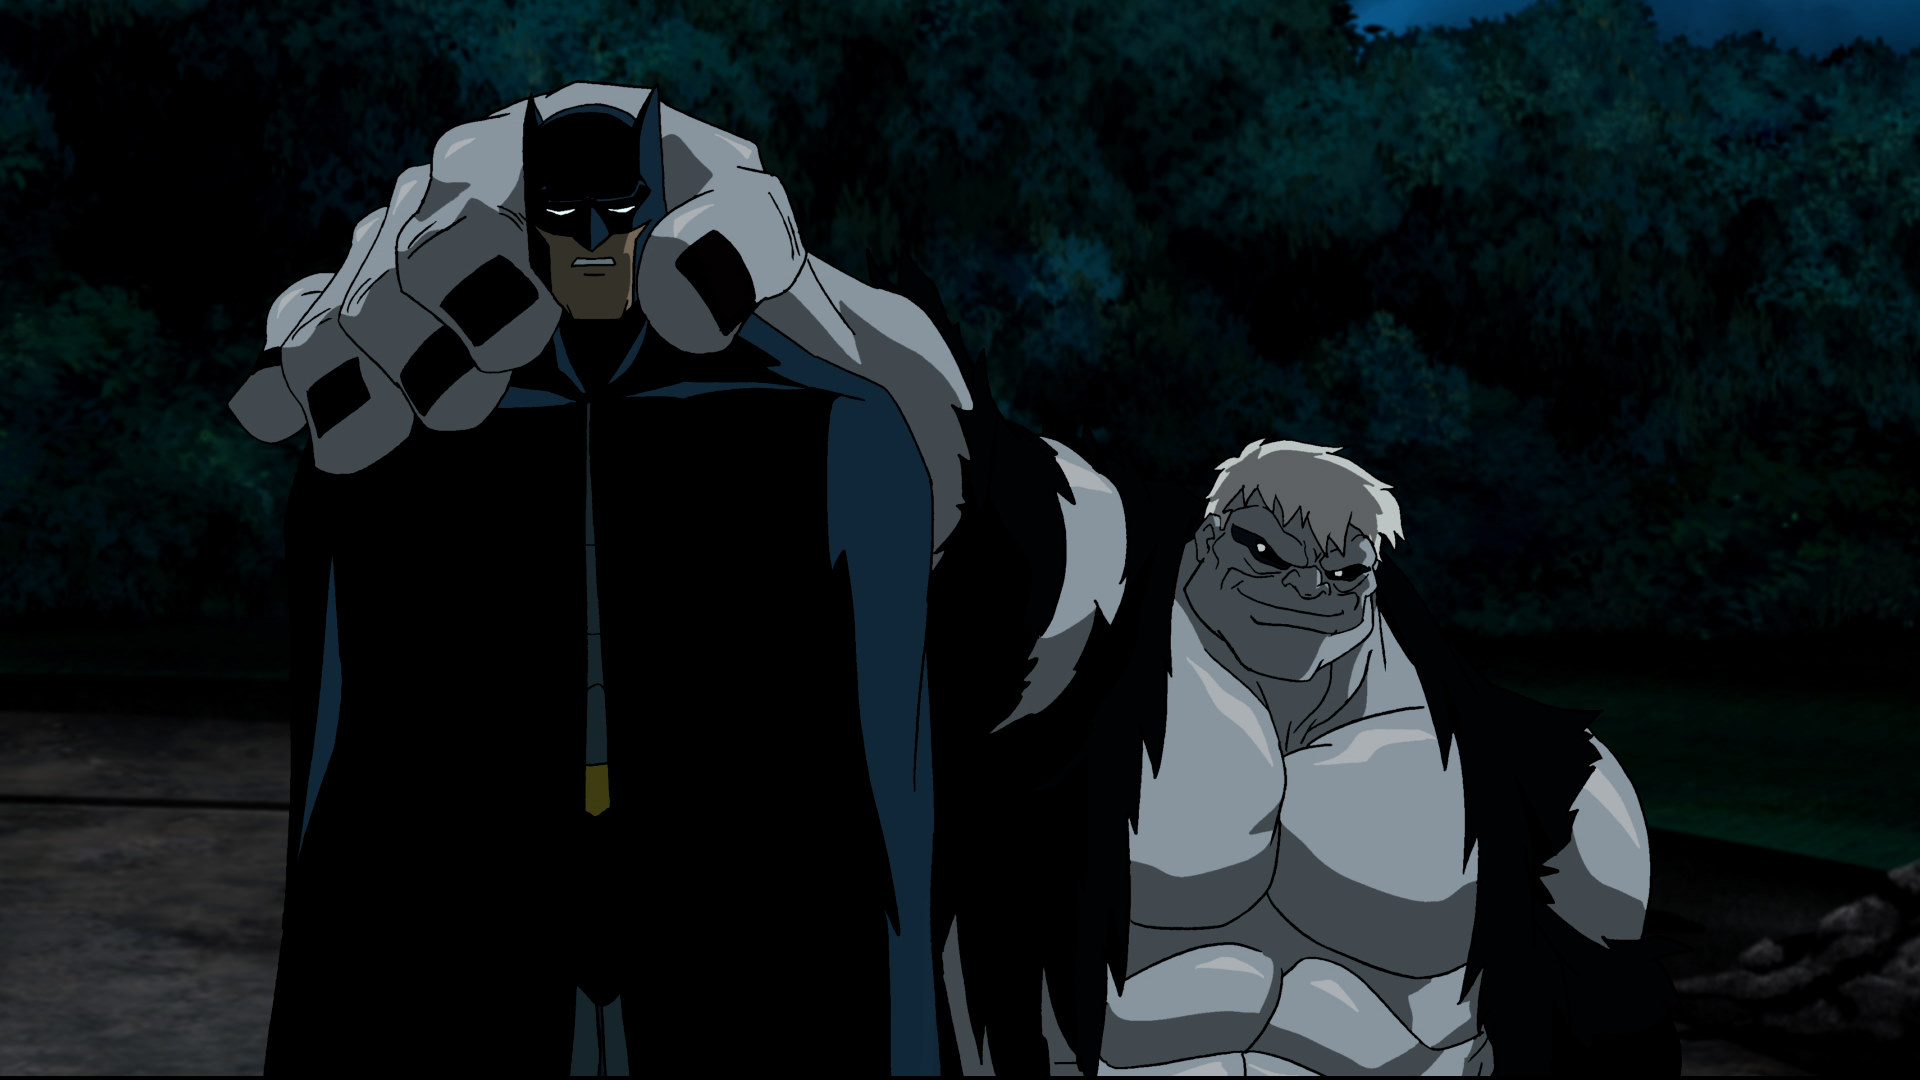 Movie Superman/Batman: Public Enemies HD Wallpaper | Background Image